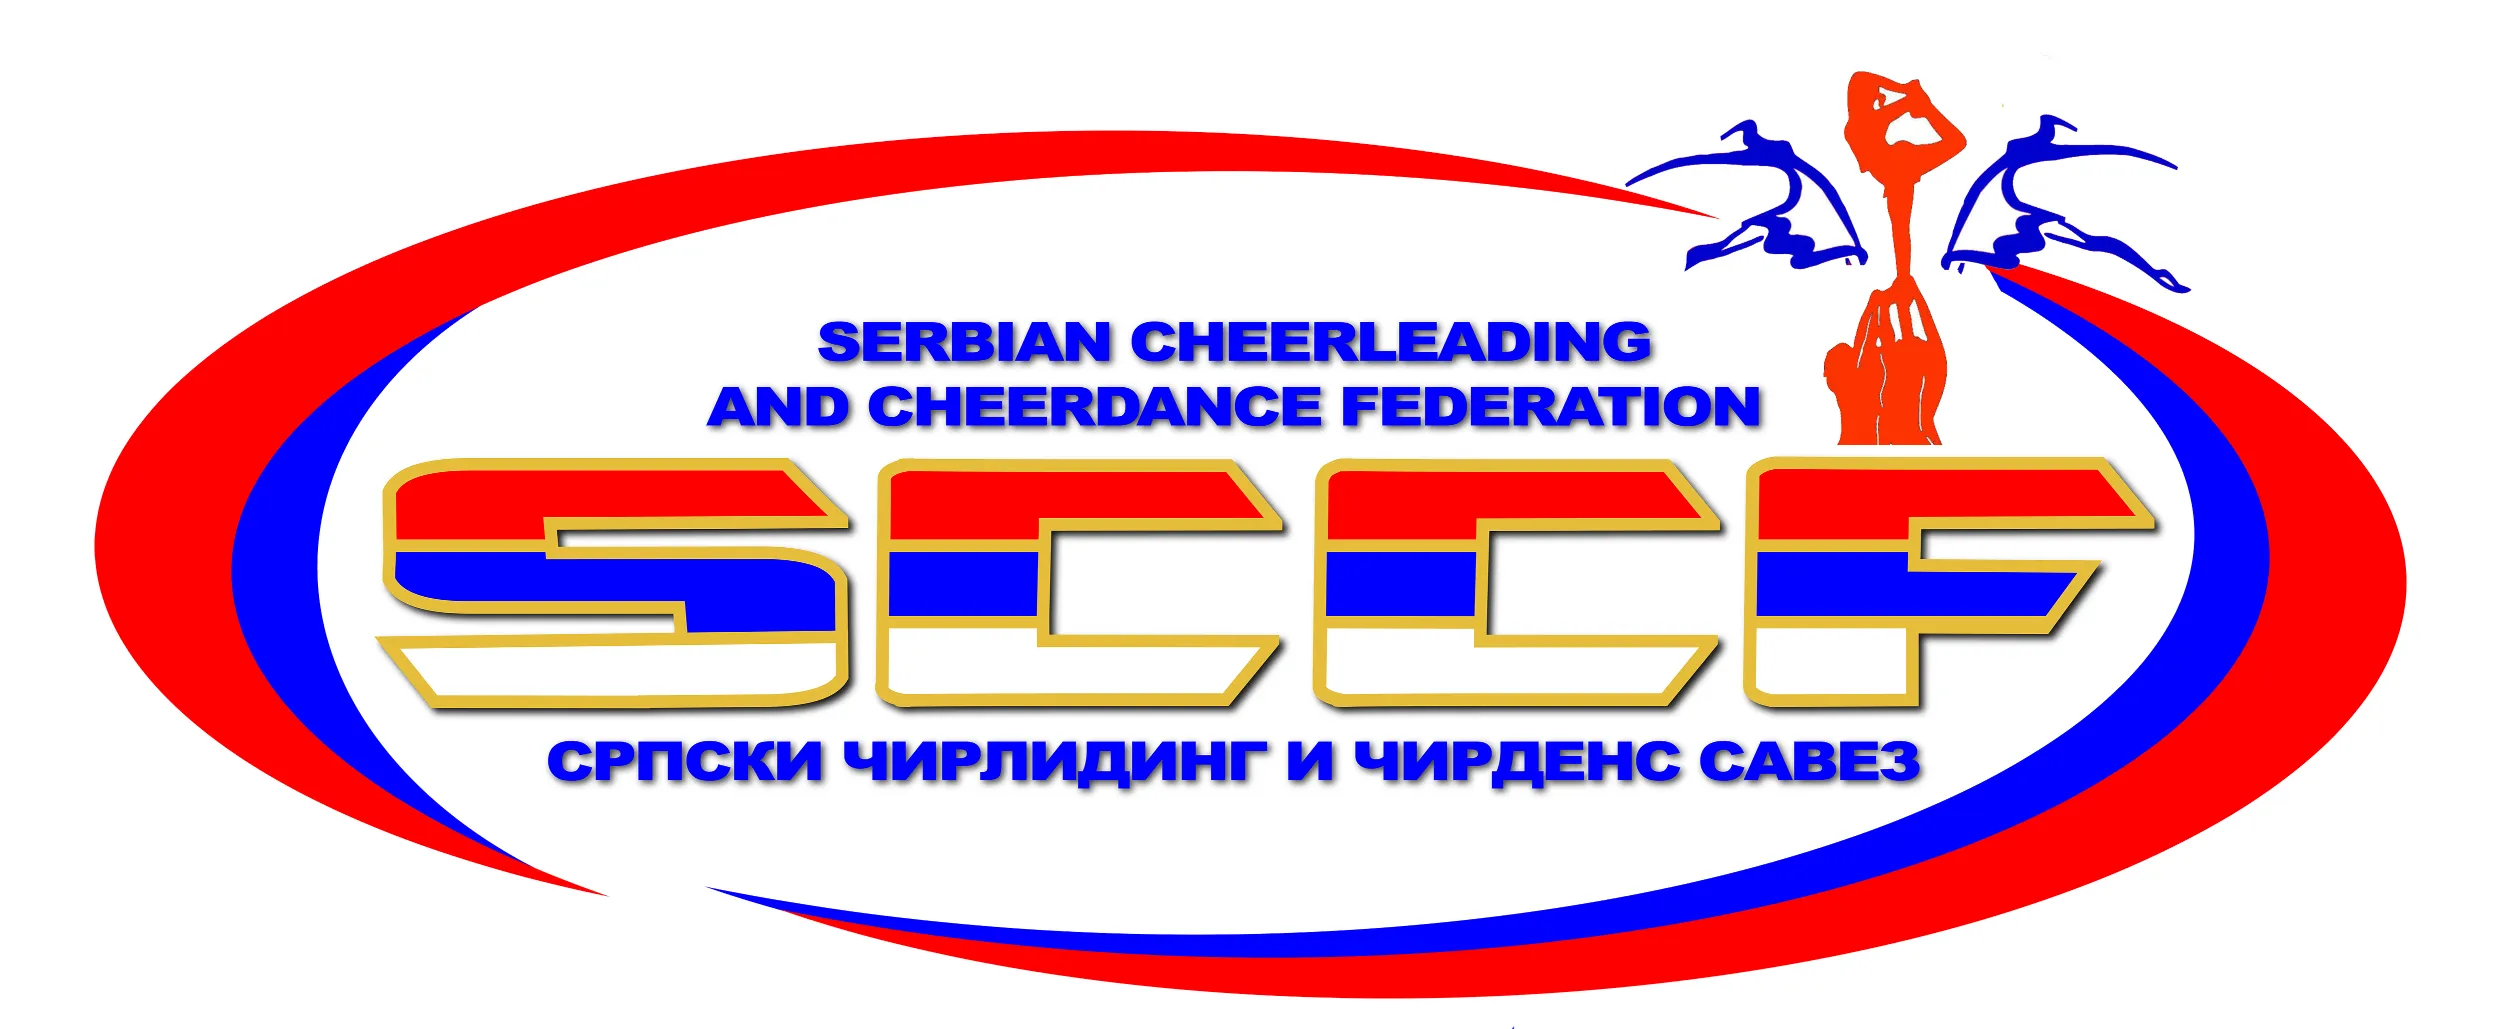 Cheerleading – Srpski čirliding i čirdens savez